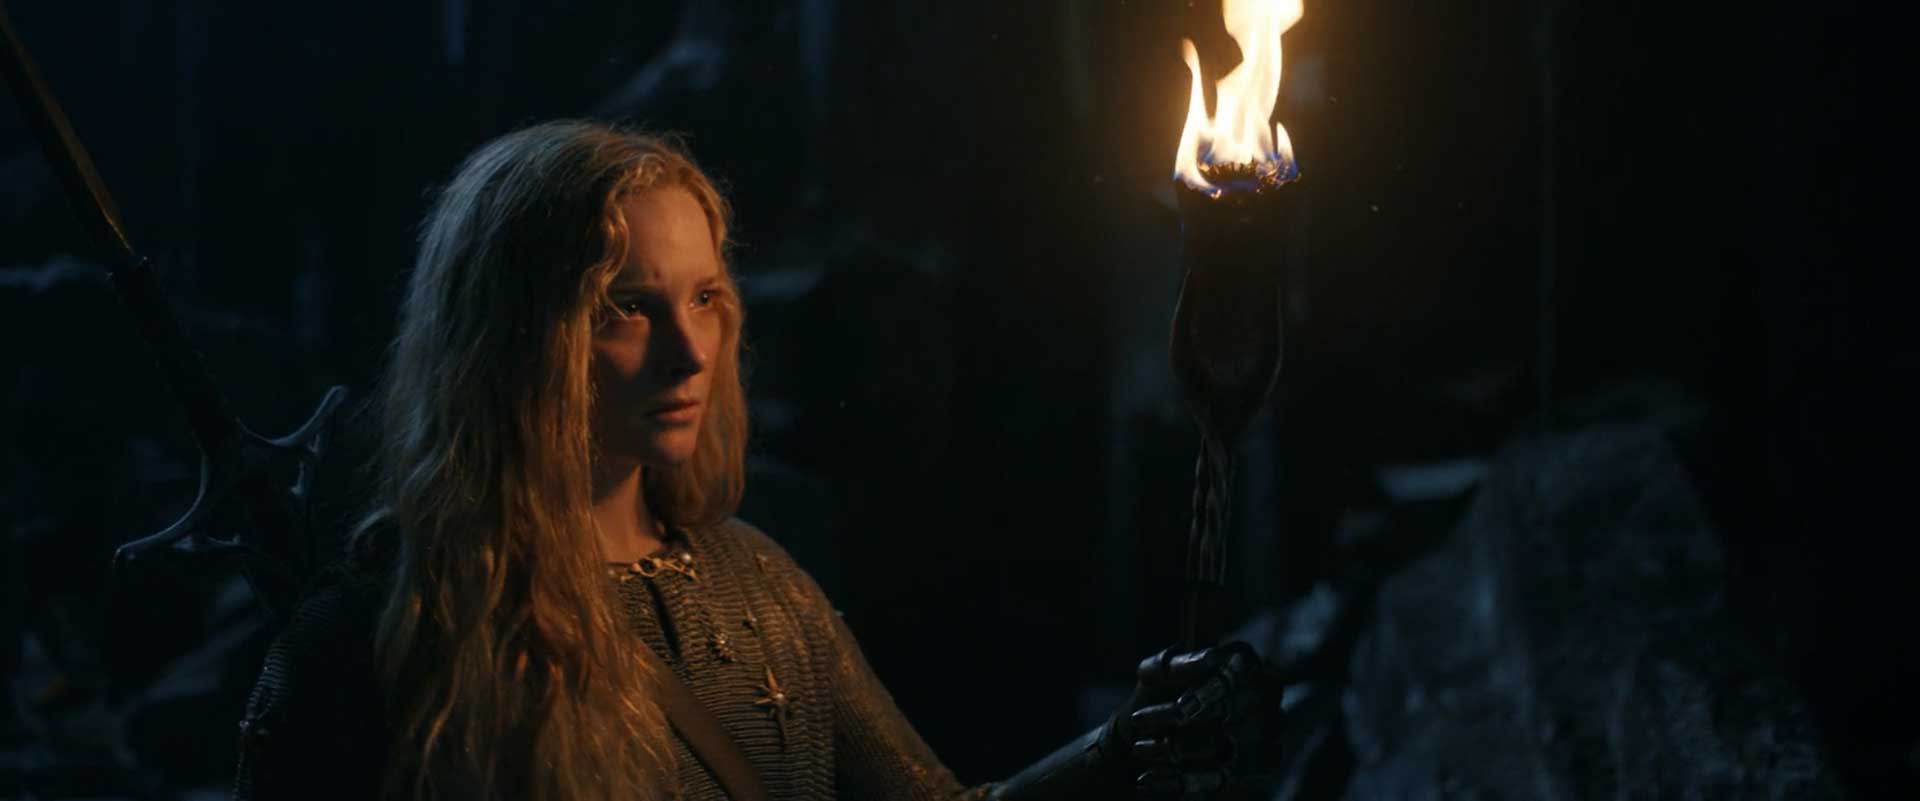 مشعل آتش در دست مورفید کلارک، بازیگر نقش گالادریل در سریال The Lord of the Rings (ارباب حلقه ها) شبکه آمازون پرایم ویدیو